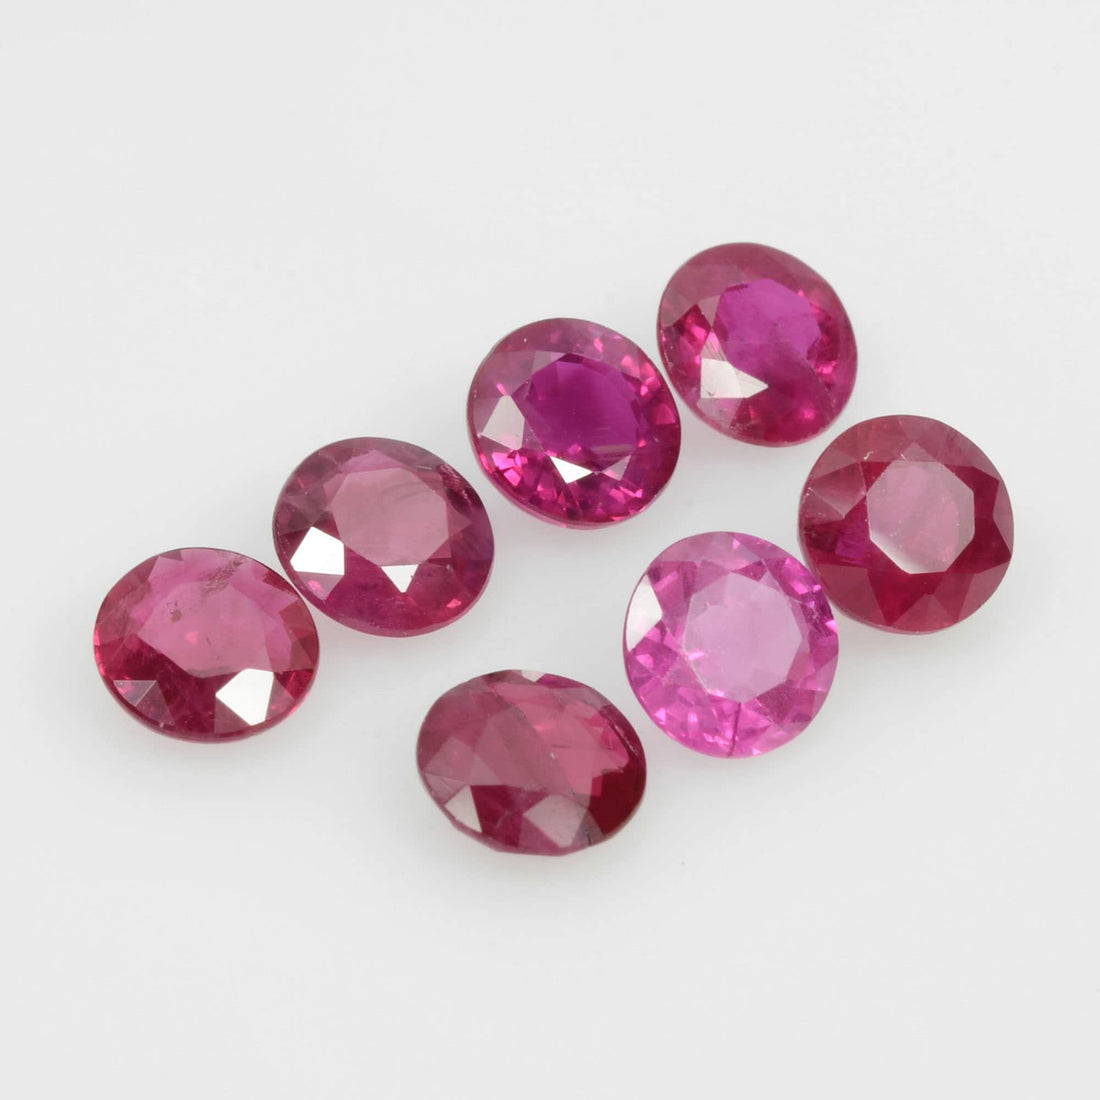 4.5-5.8 mm Natural Ruby Loose Gemstone Round Cut